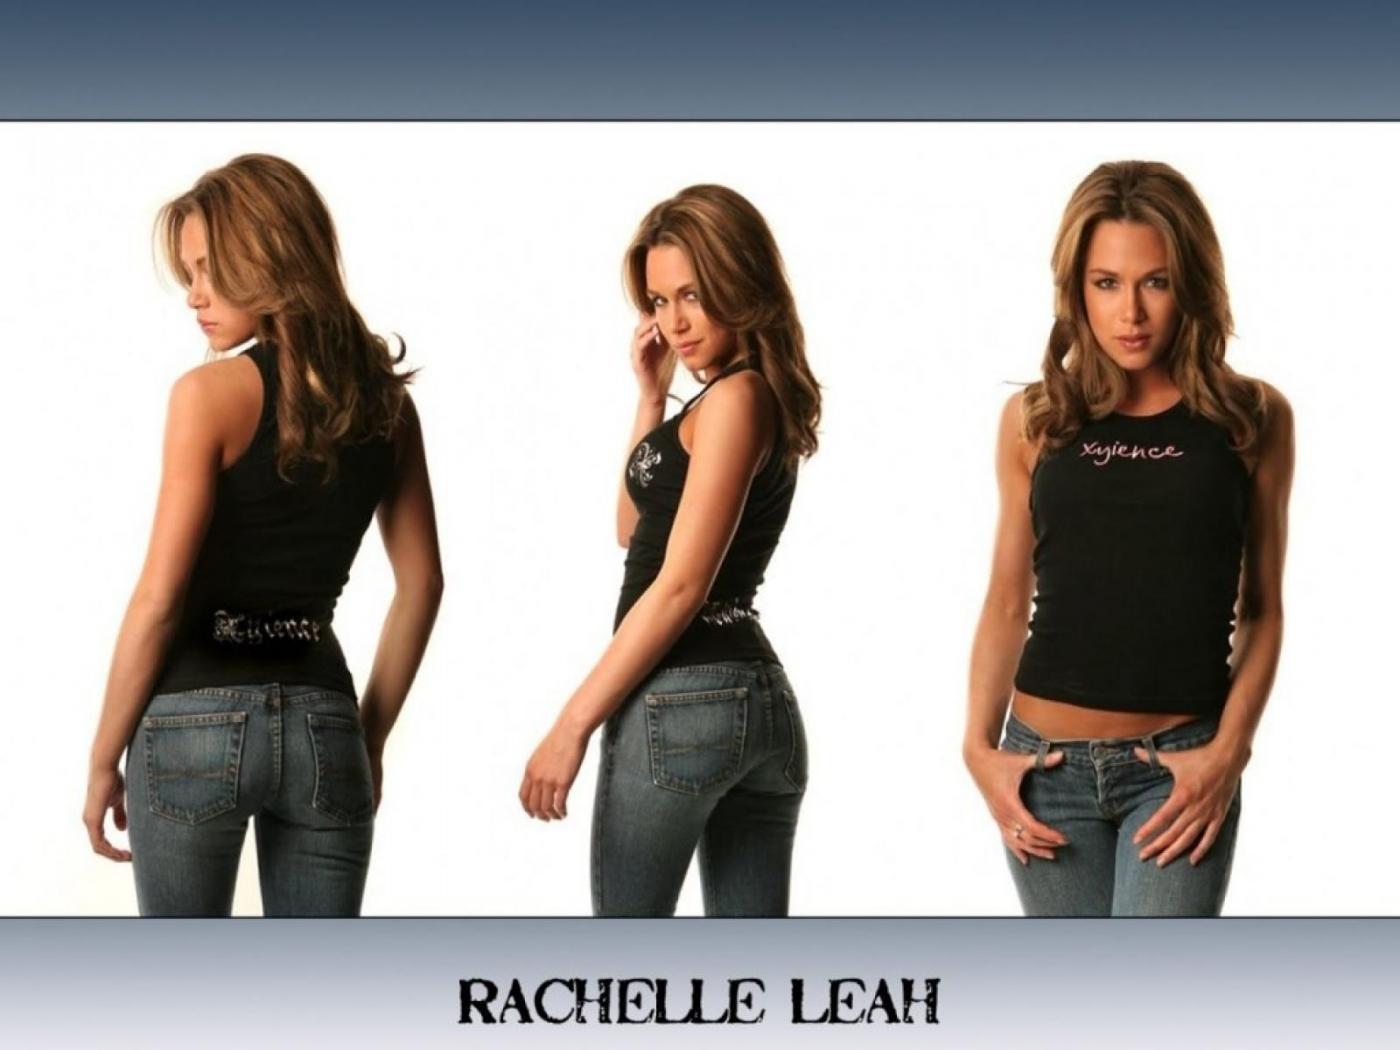 Mma Mixed Martial Arts Ring Girl Rachelle Leah Wallpaper Background